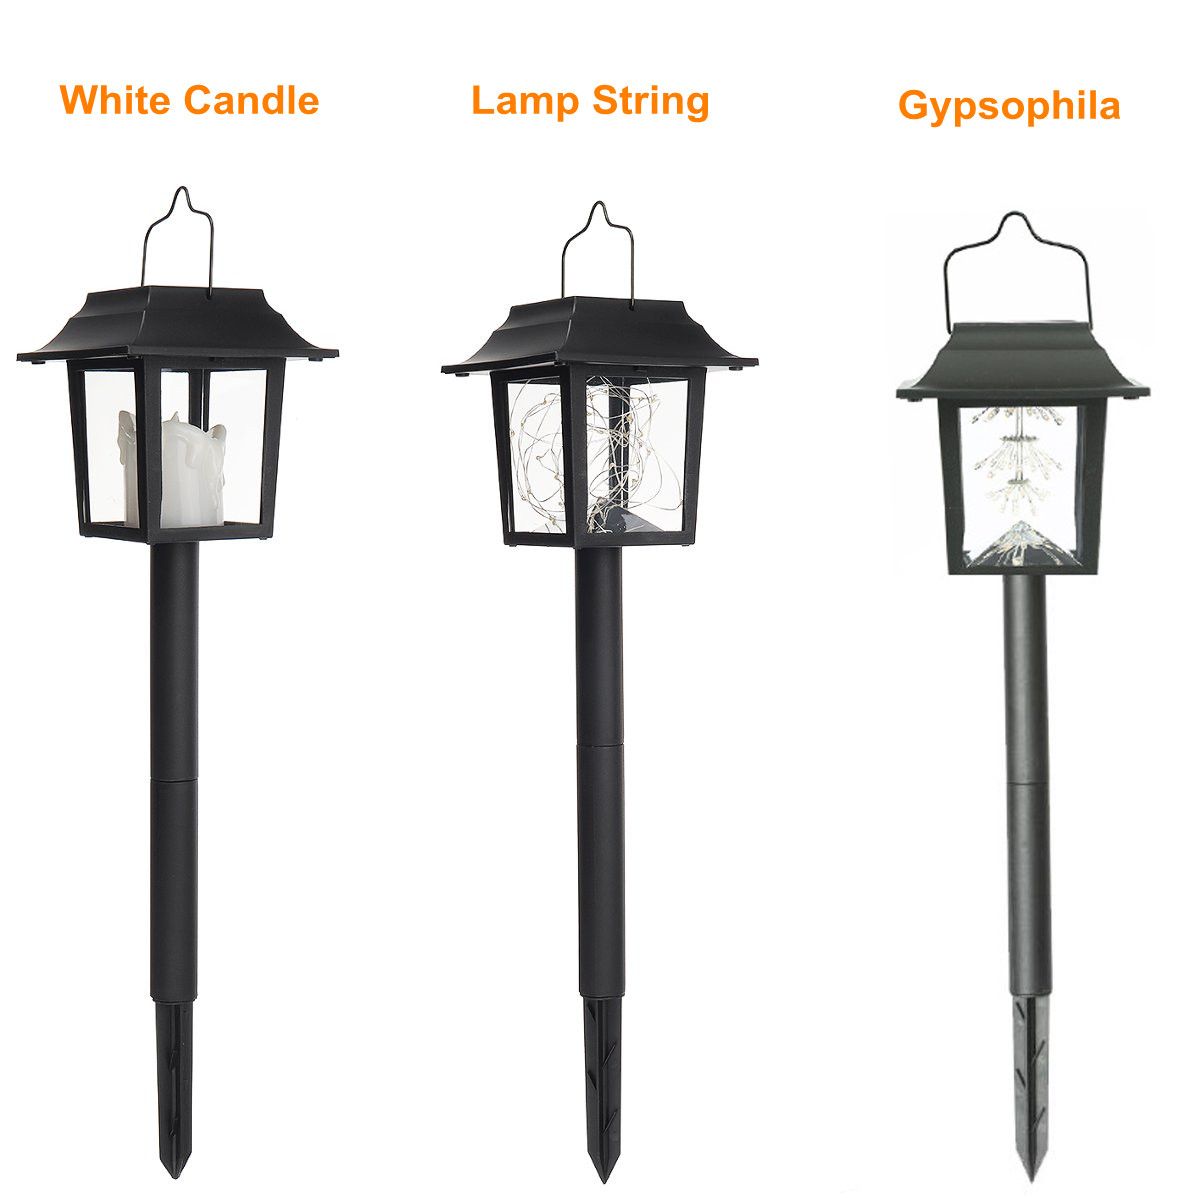 Solar-Powered-Lantern-LED-Candle-Lamp-Home-Garden-Yard-Decor-Outdoor-Waterproof-1685492